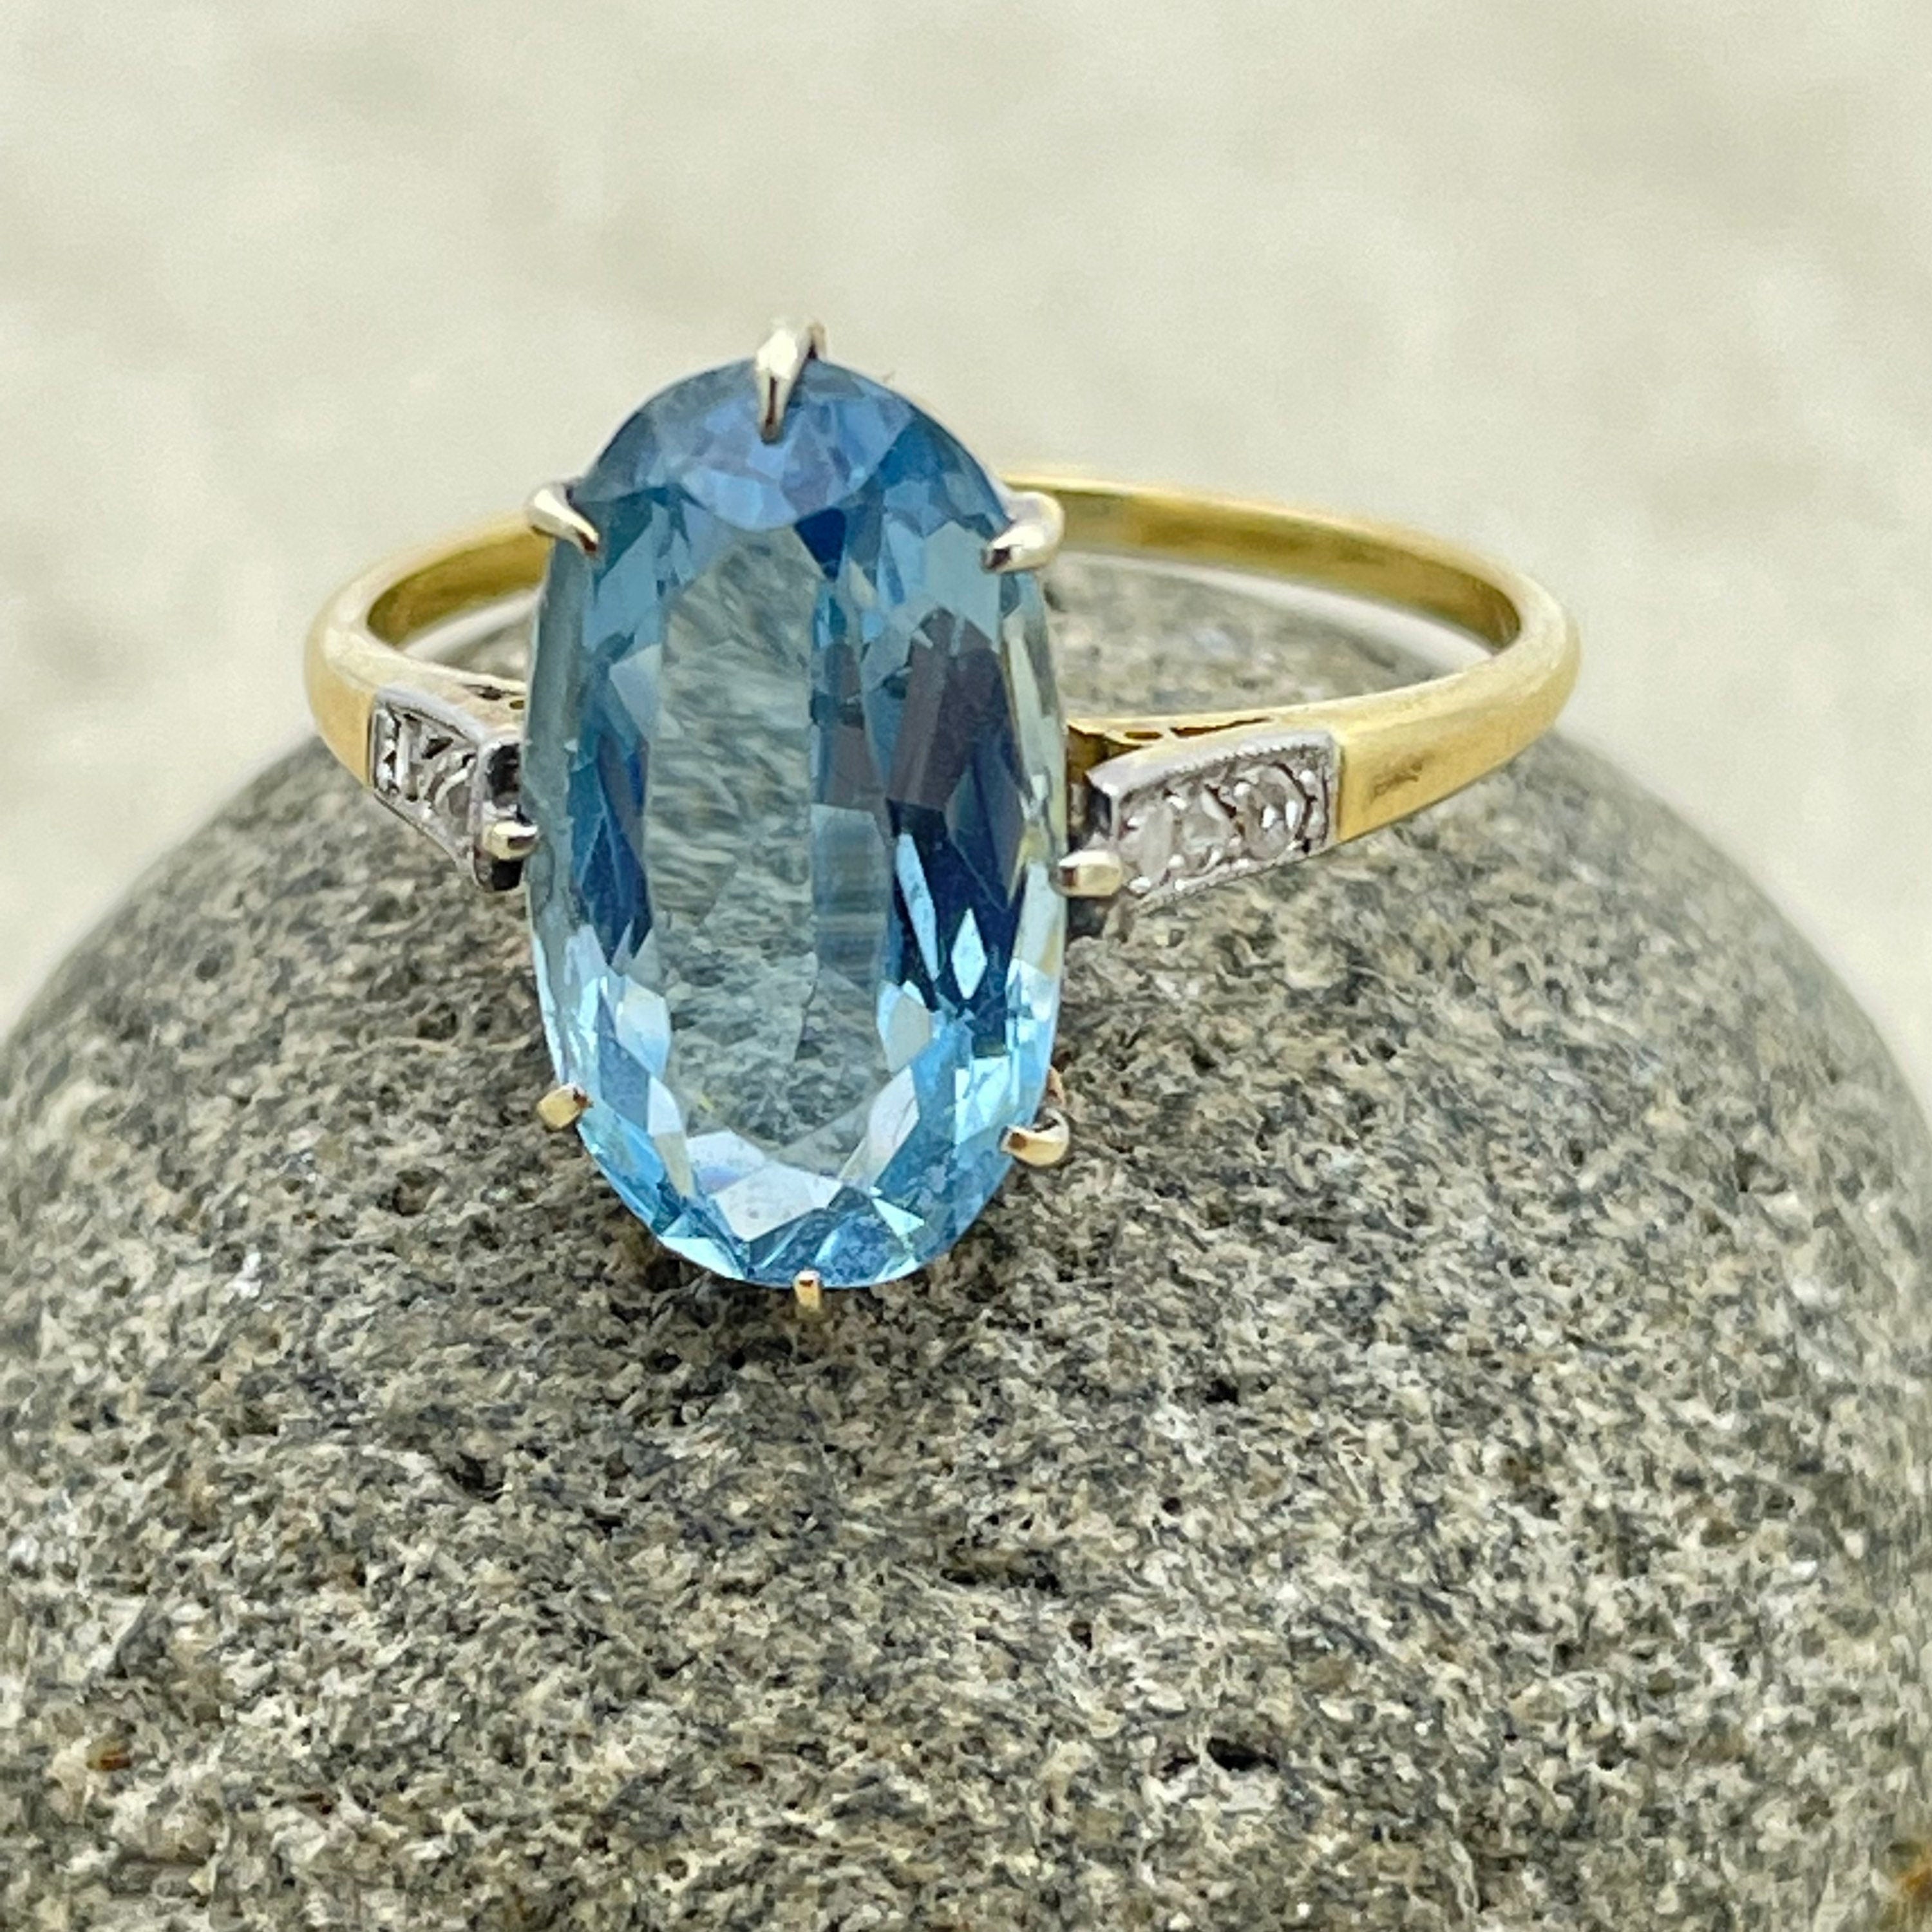 Art deco 18ct gold, aquamarine solitaire ring, with rose cut diamond shoulders, c1930s